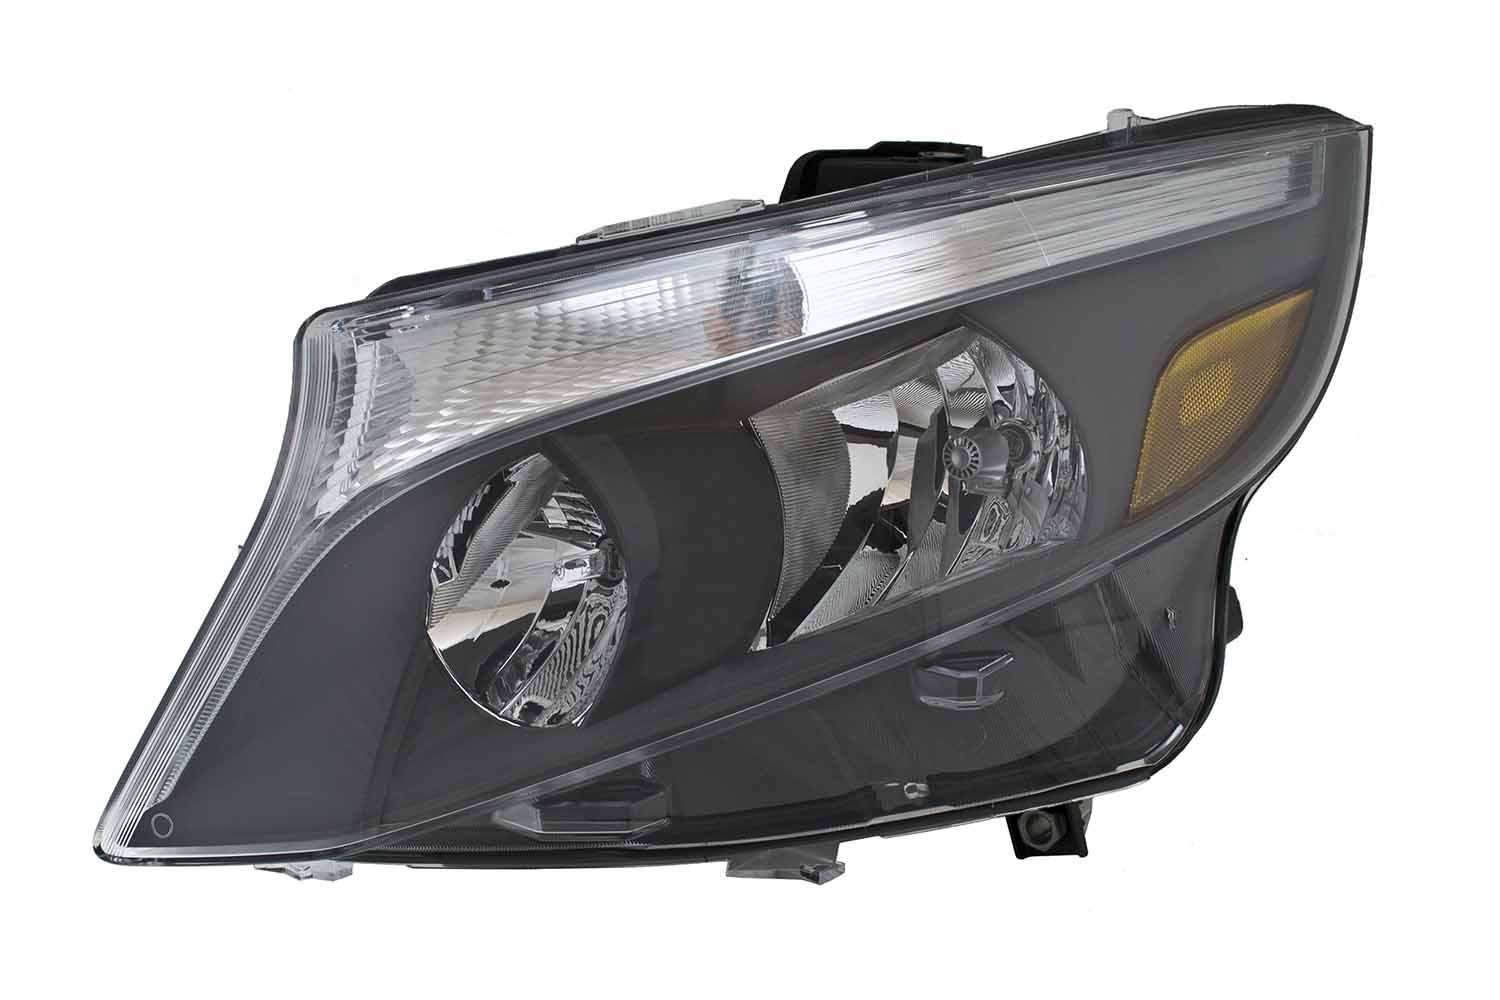 original Mercedes Vito Tourer Headlights Xenon and LED HELLA 1EL 011 284-551